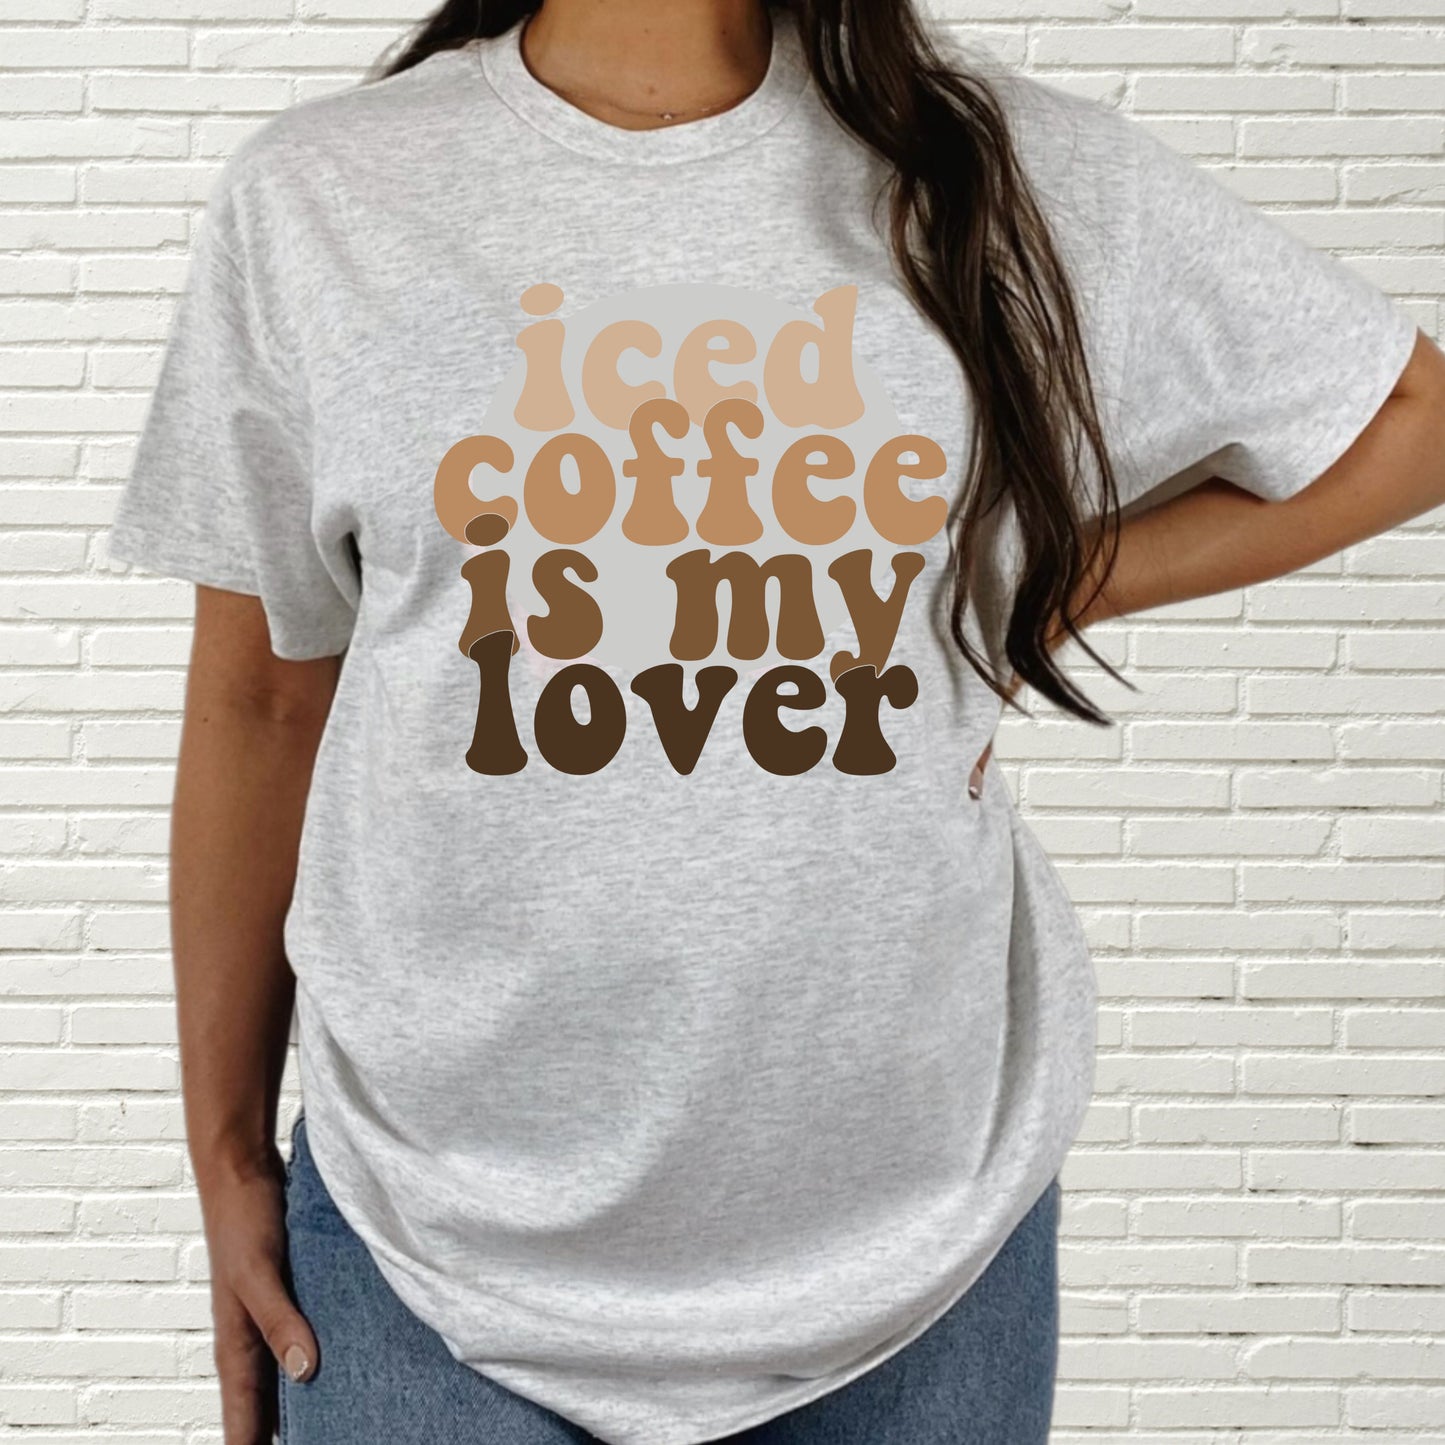 Iced coffee is my lover tee